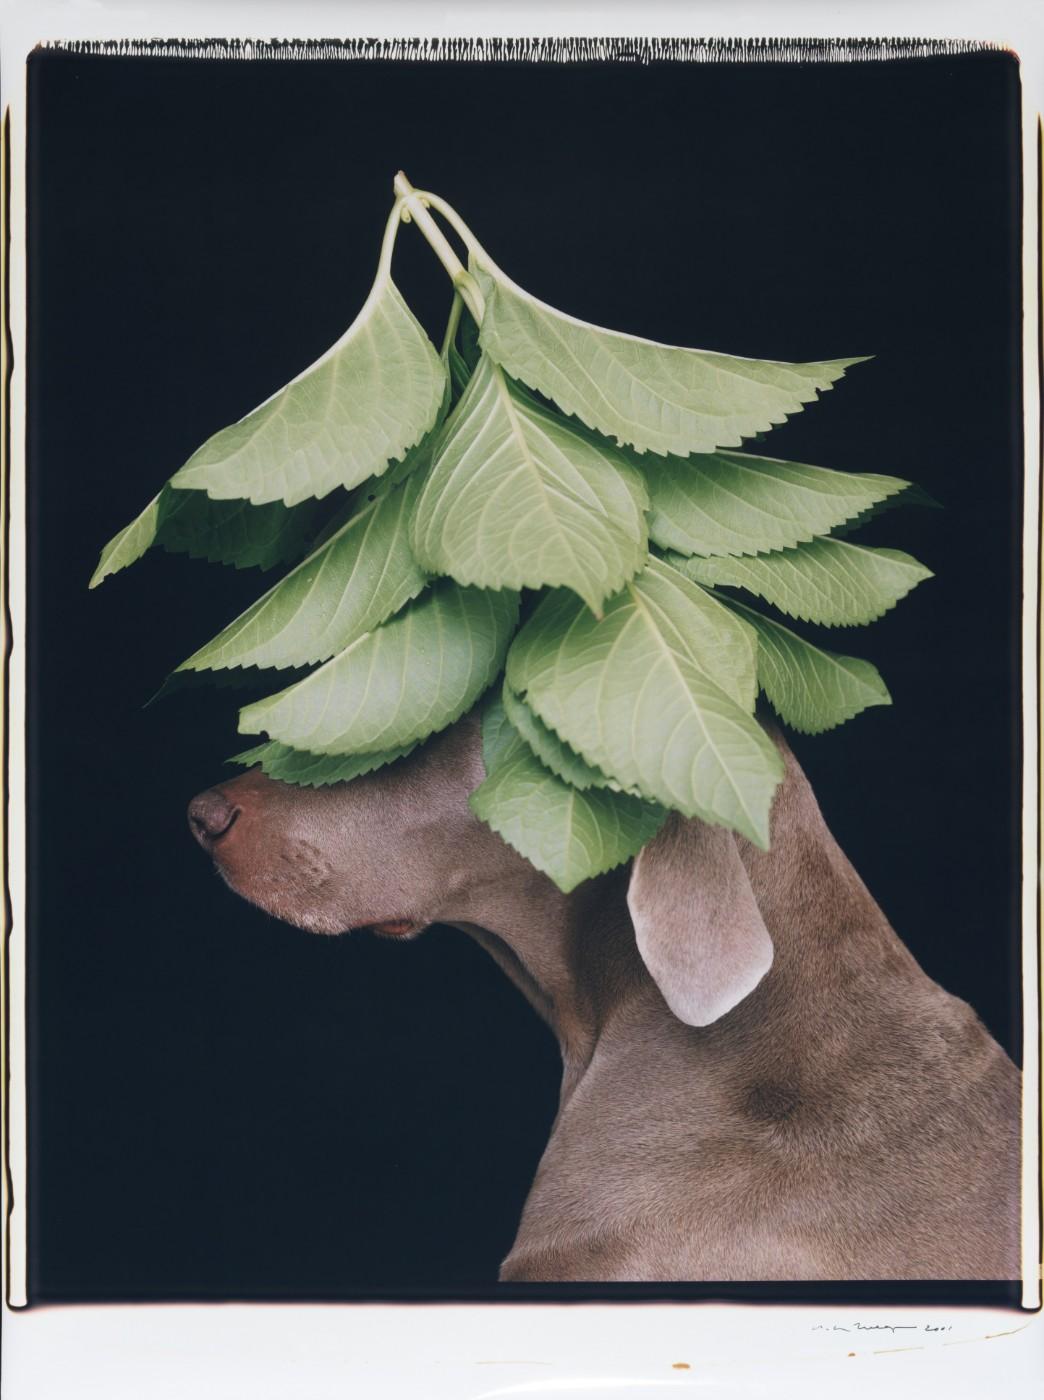 William Wegman, Green Up, 2001. Color Polaroid, 24 x 20 in. 